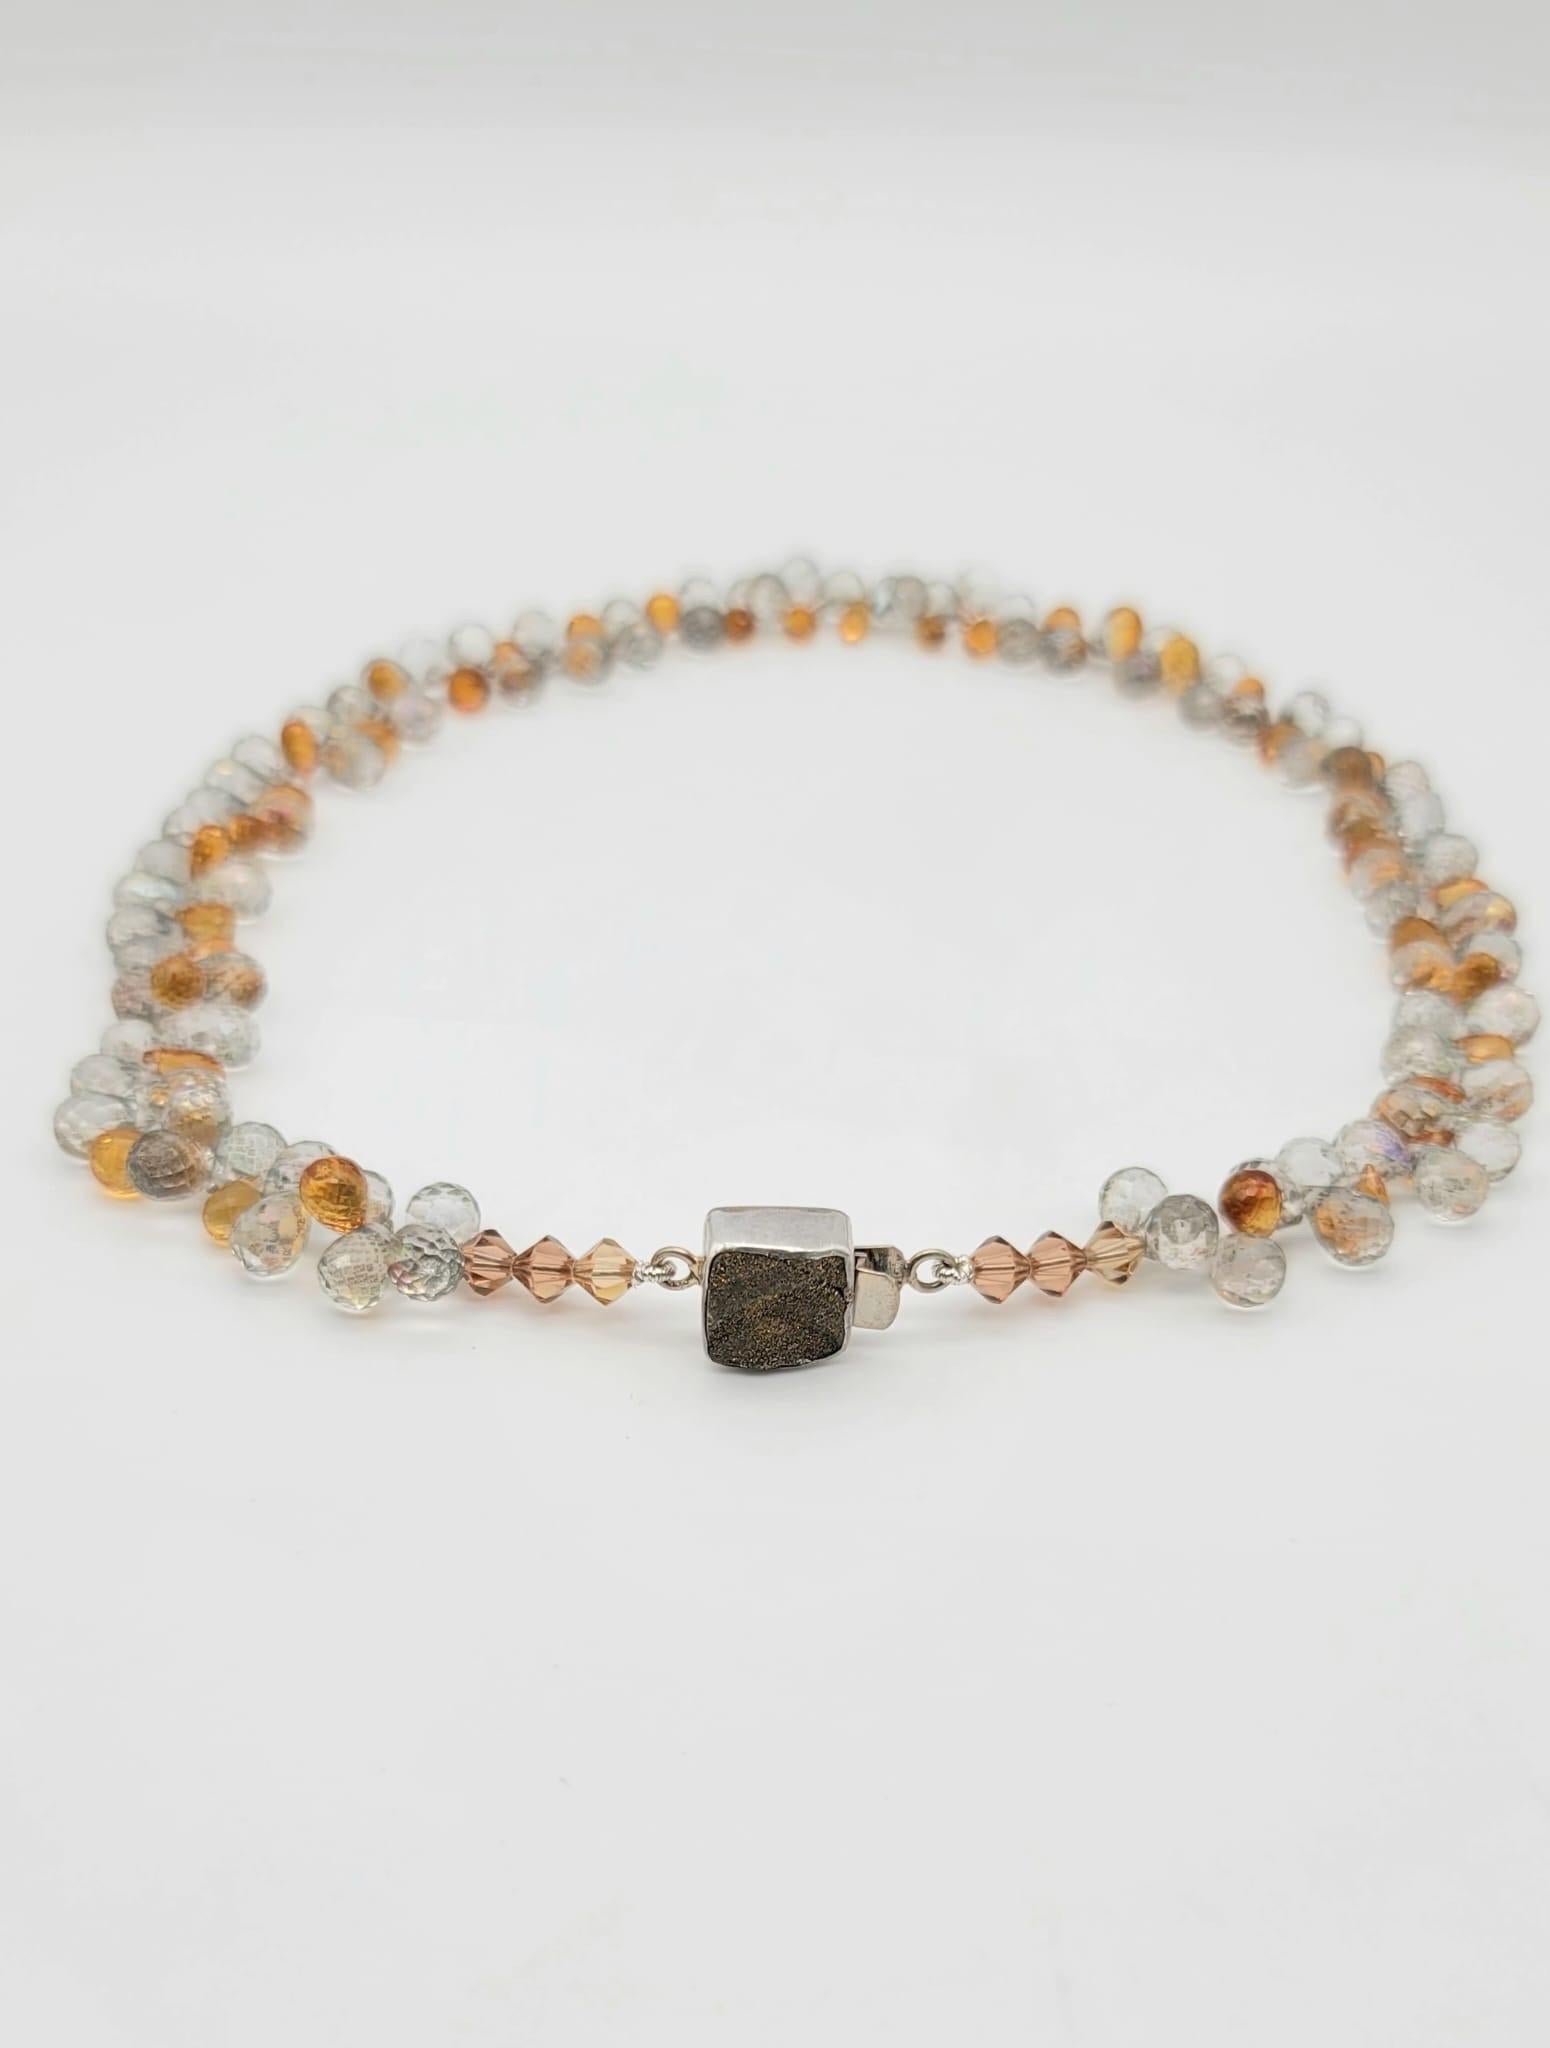 A.Jeschel  Stunning Topaz and Crystal Quartz teardrop necklace For Sale 5